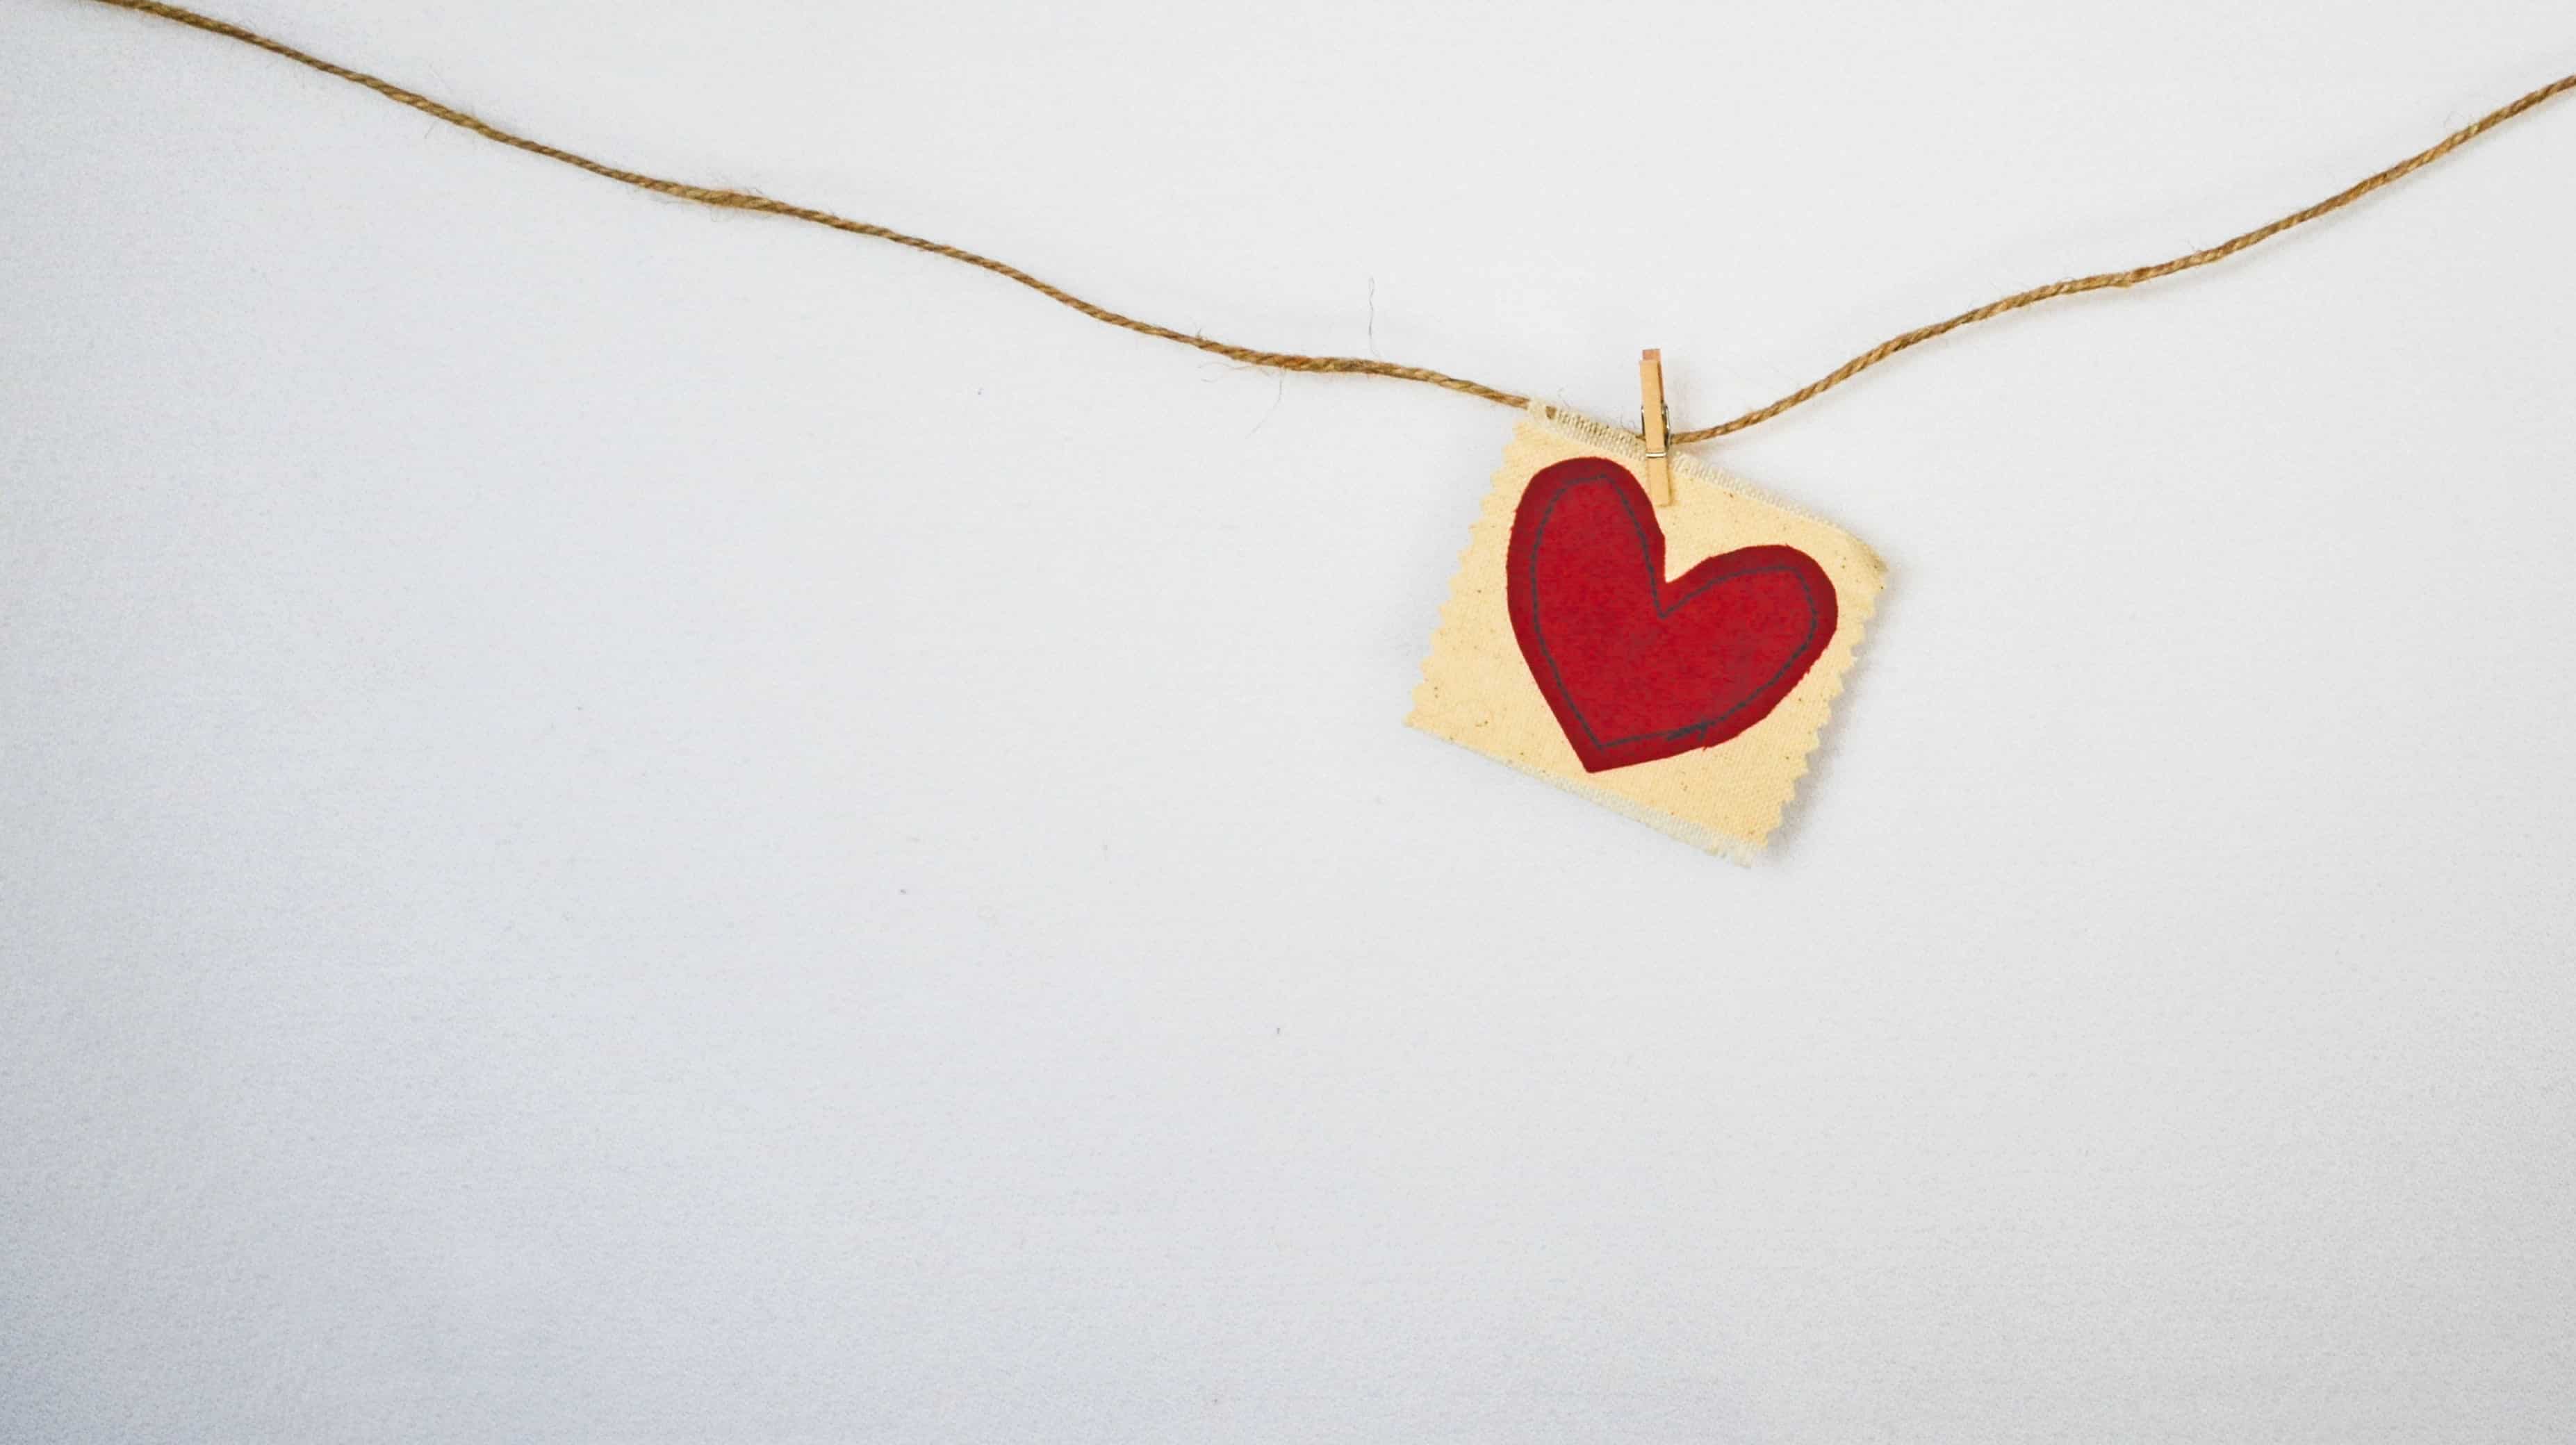 Fabric heart symbol  pegged on string